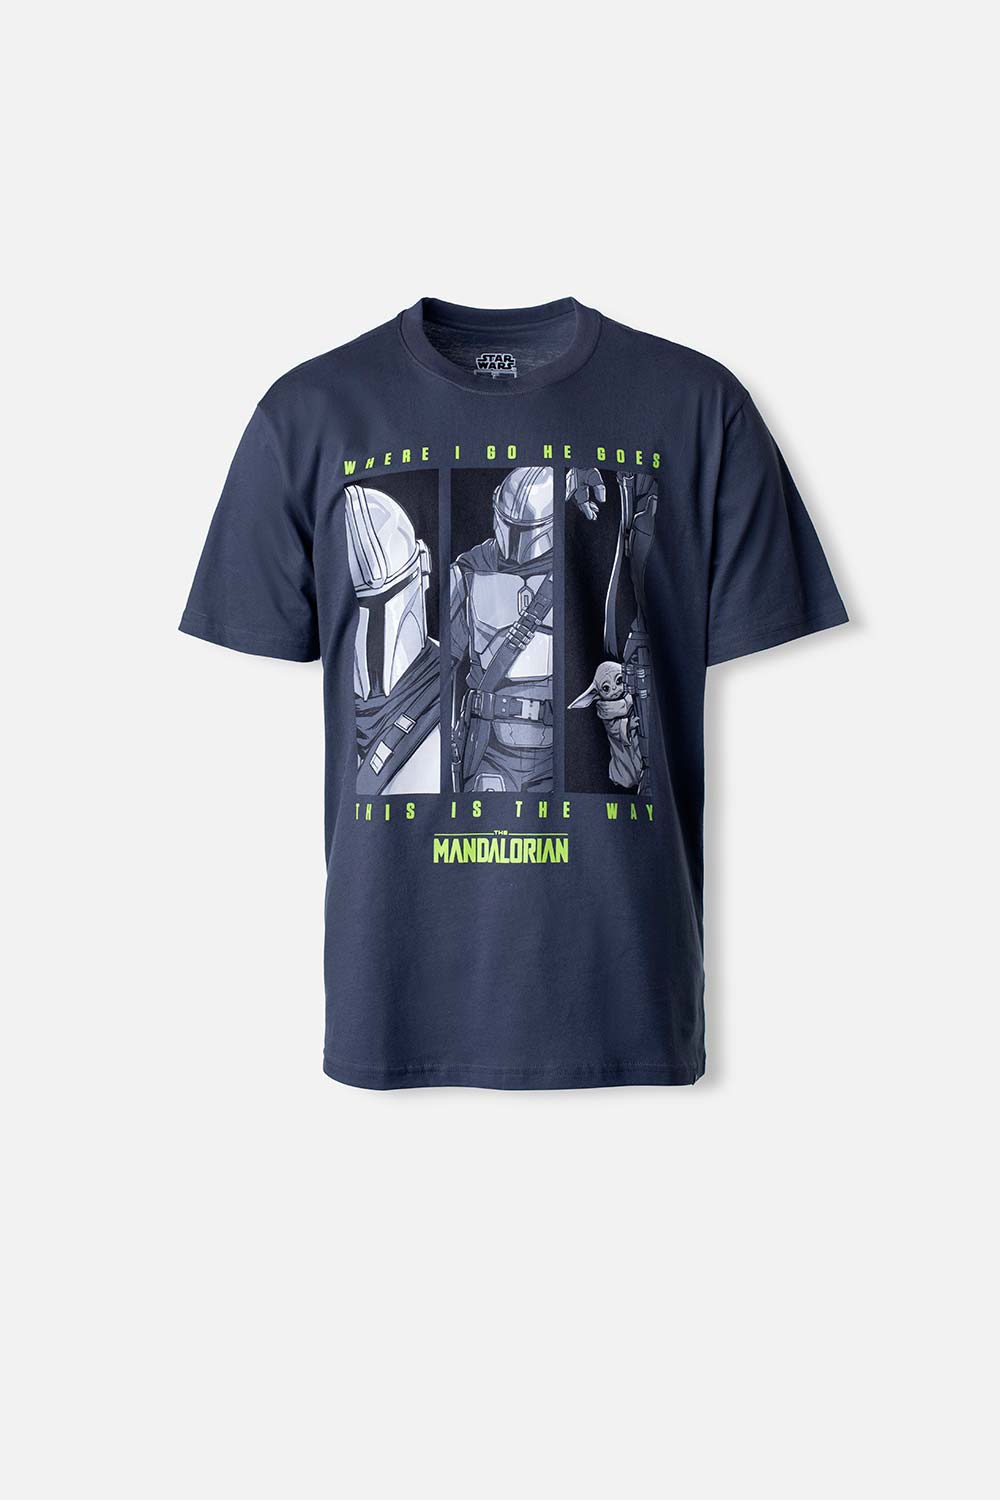 Camiseta de Mandalorian manga corta gris grafito para hombre L-0